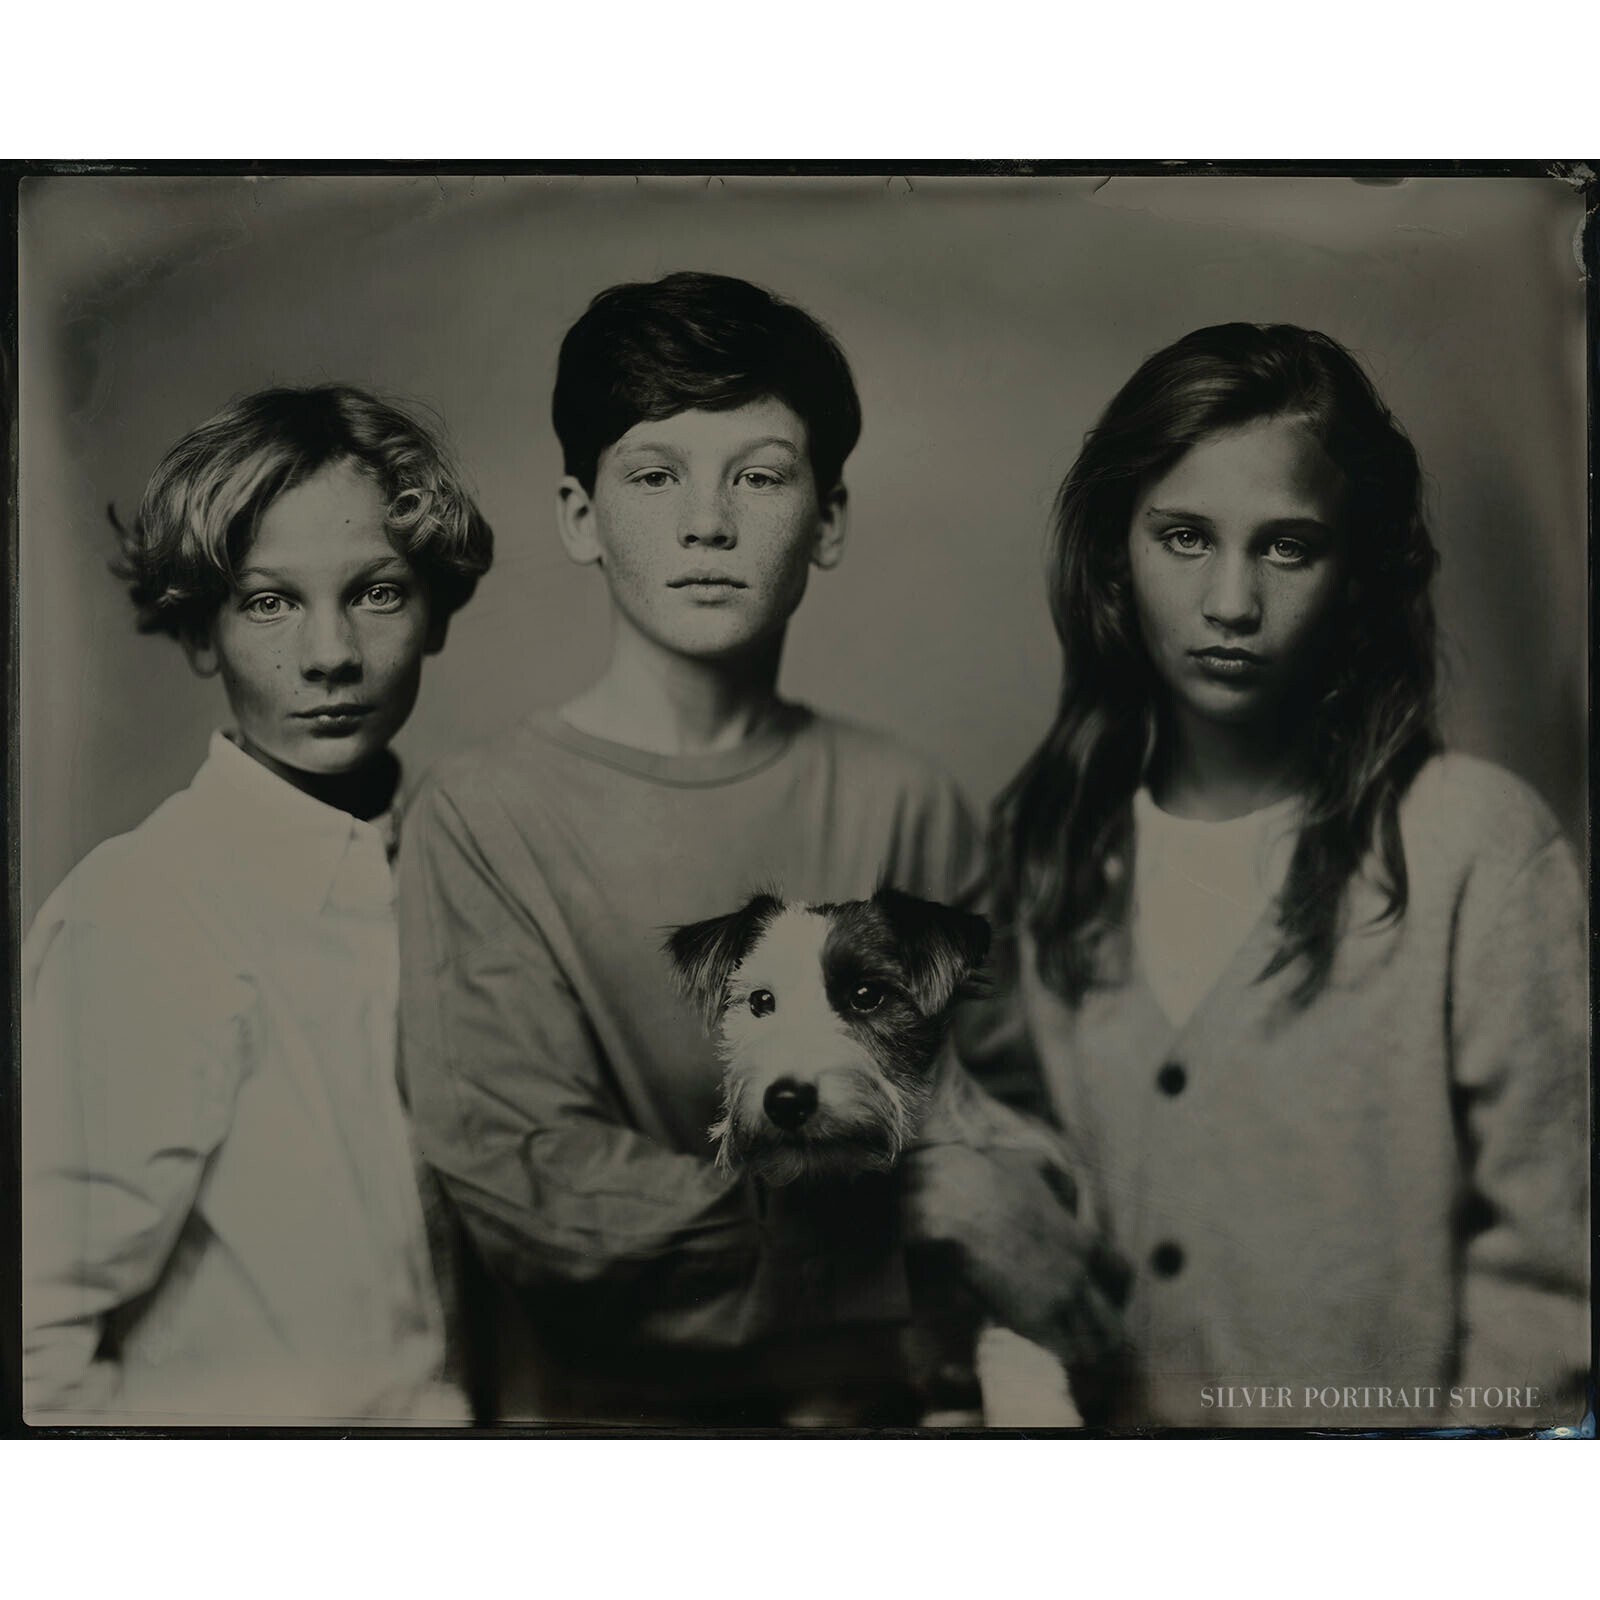 Berke, Owen, Anja & Piet-Silver Portrait Store-Wet plate collodion-Tintype 20 x 25 cm.